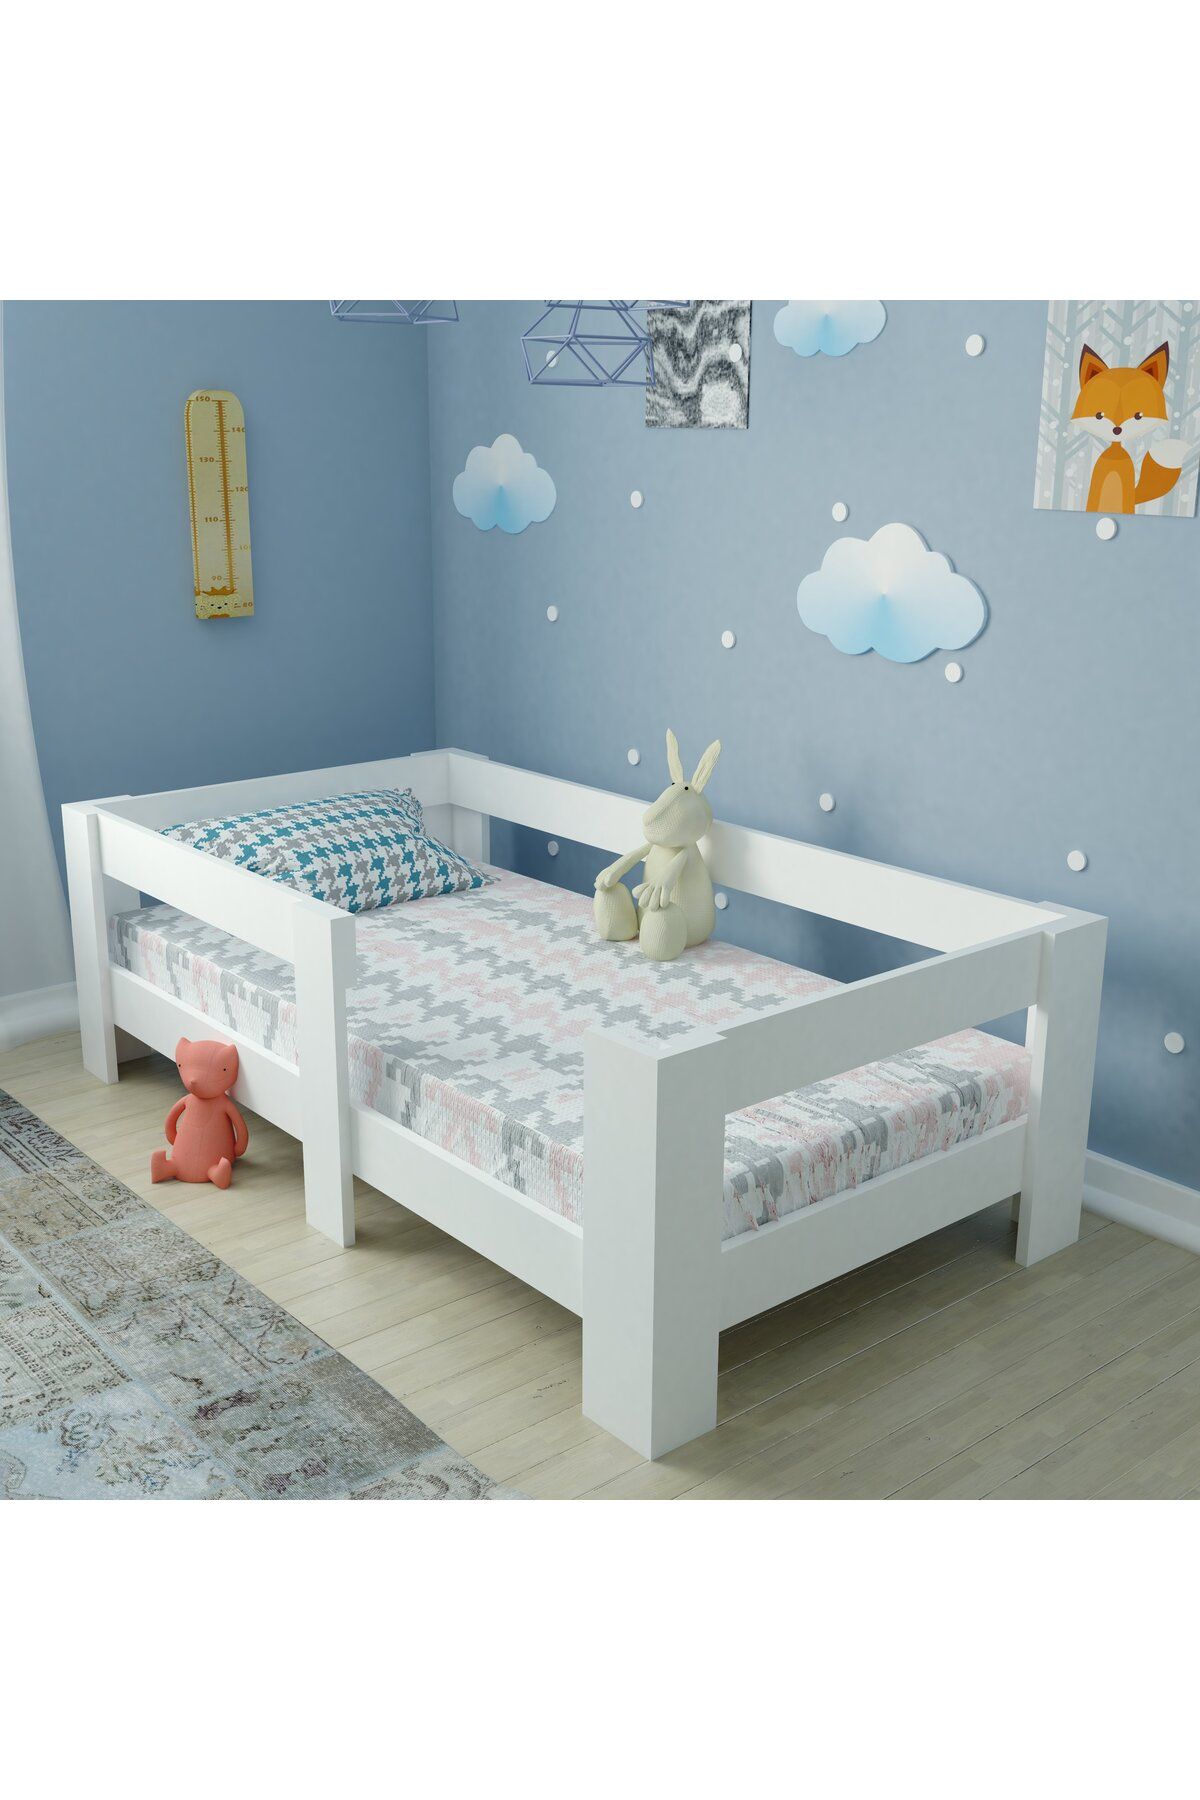 Ninnimo Beyaz Mdf 70x130 Yatak Uyumlu Montessori Karyola